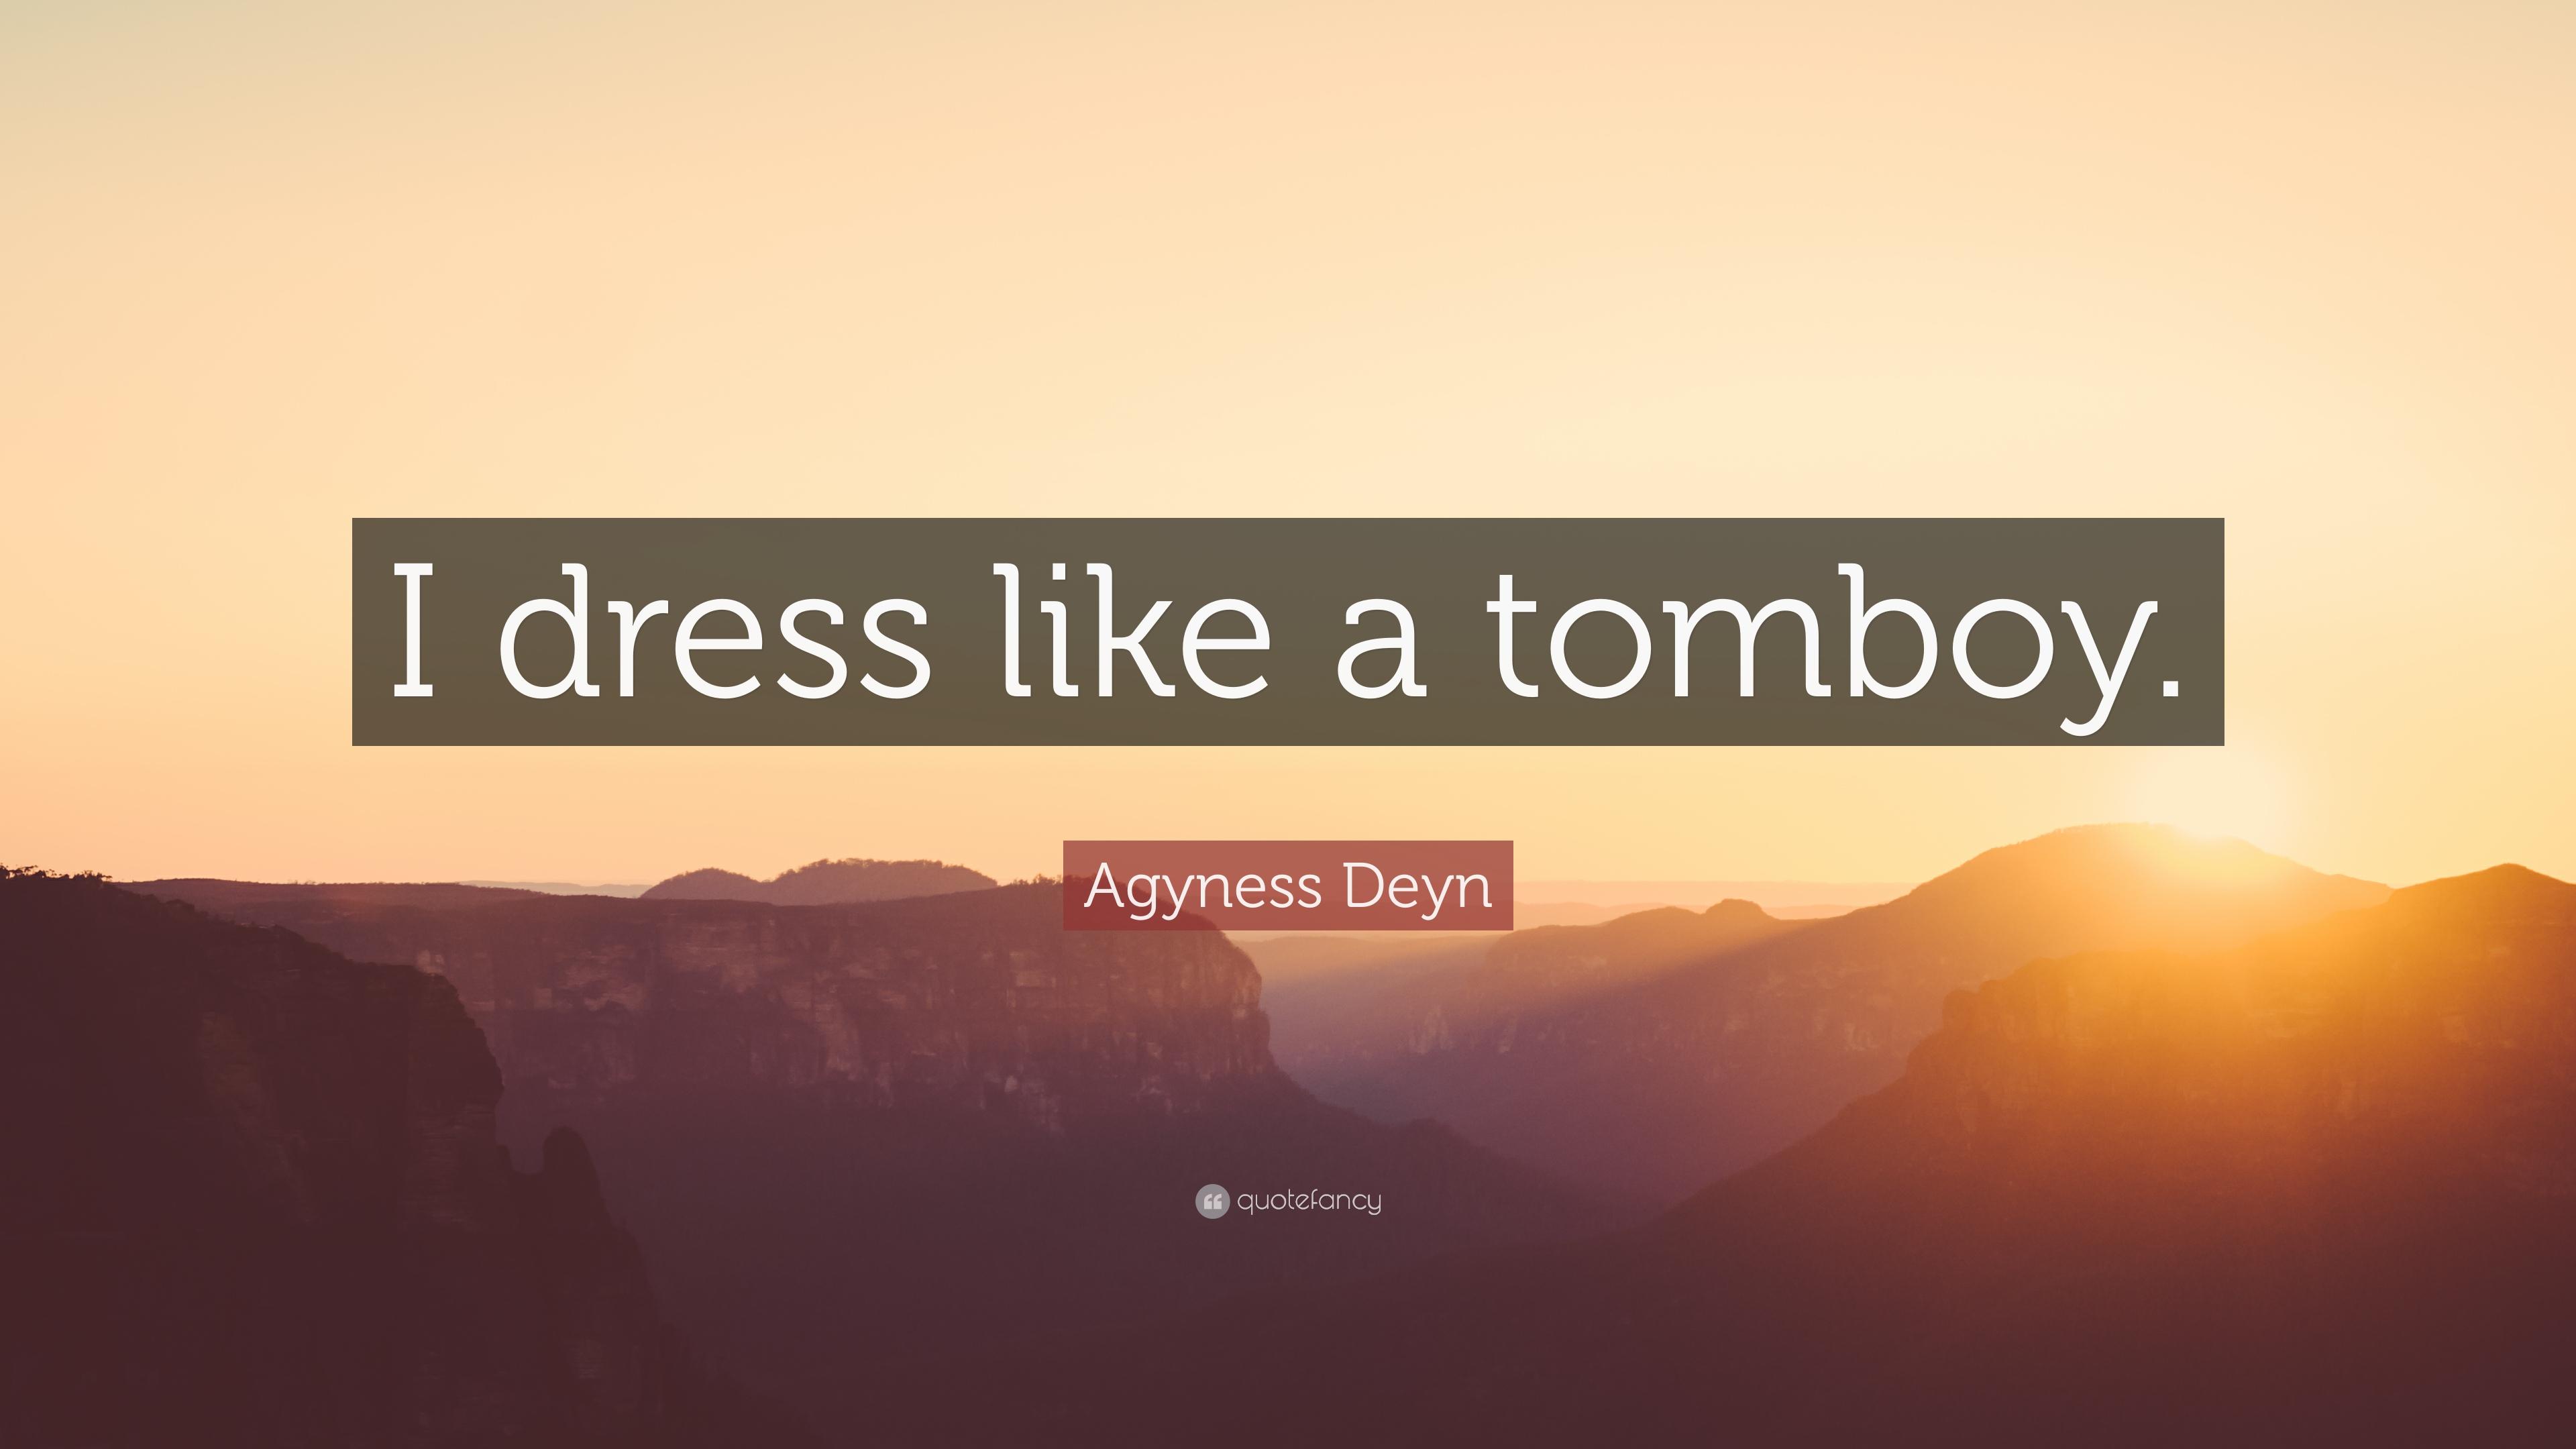 Agyness Deyn Quote: “I dress like a tomboy.” (7 wallpaper)